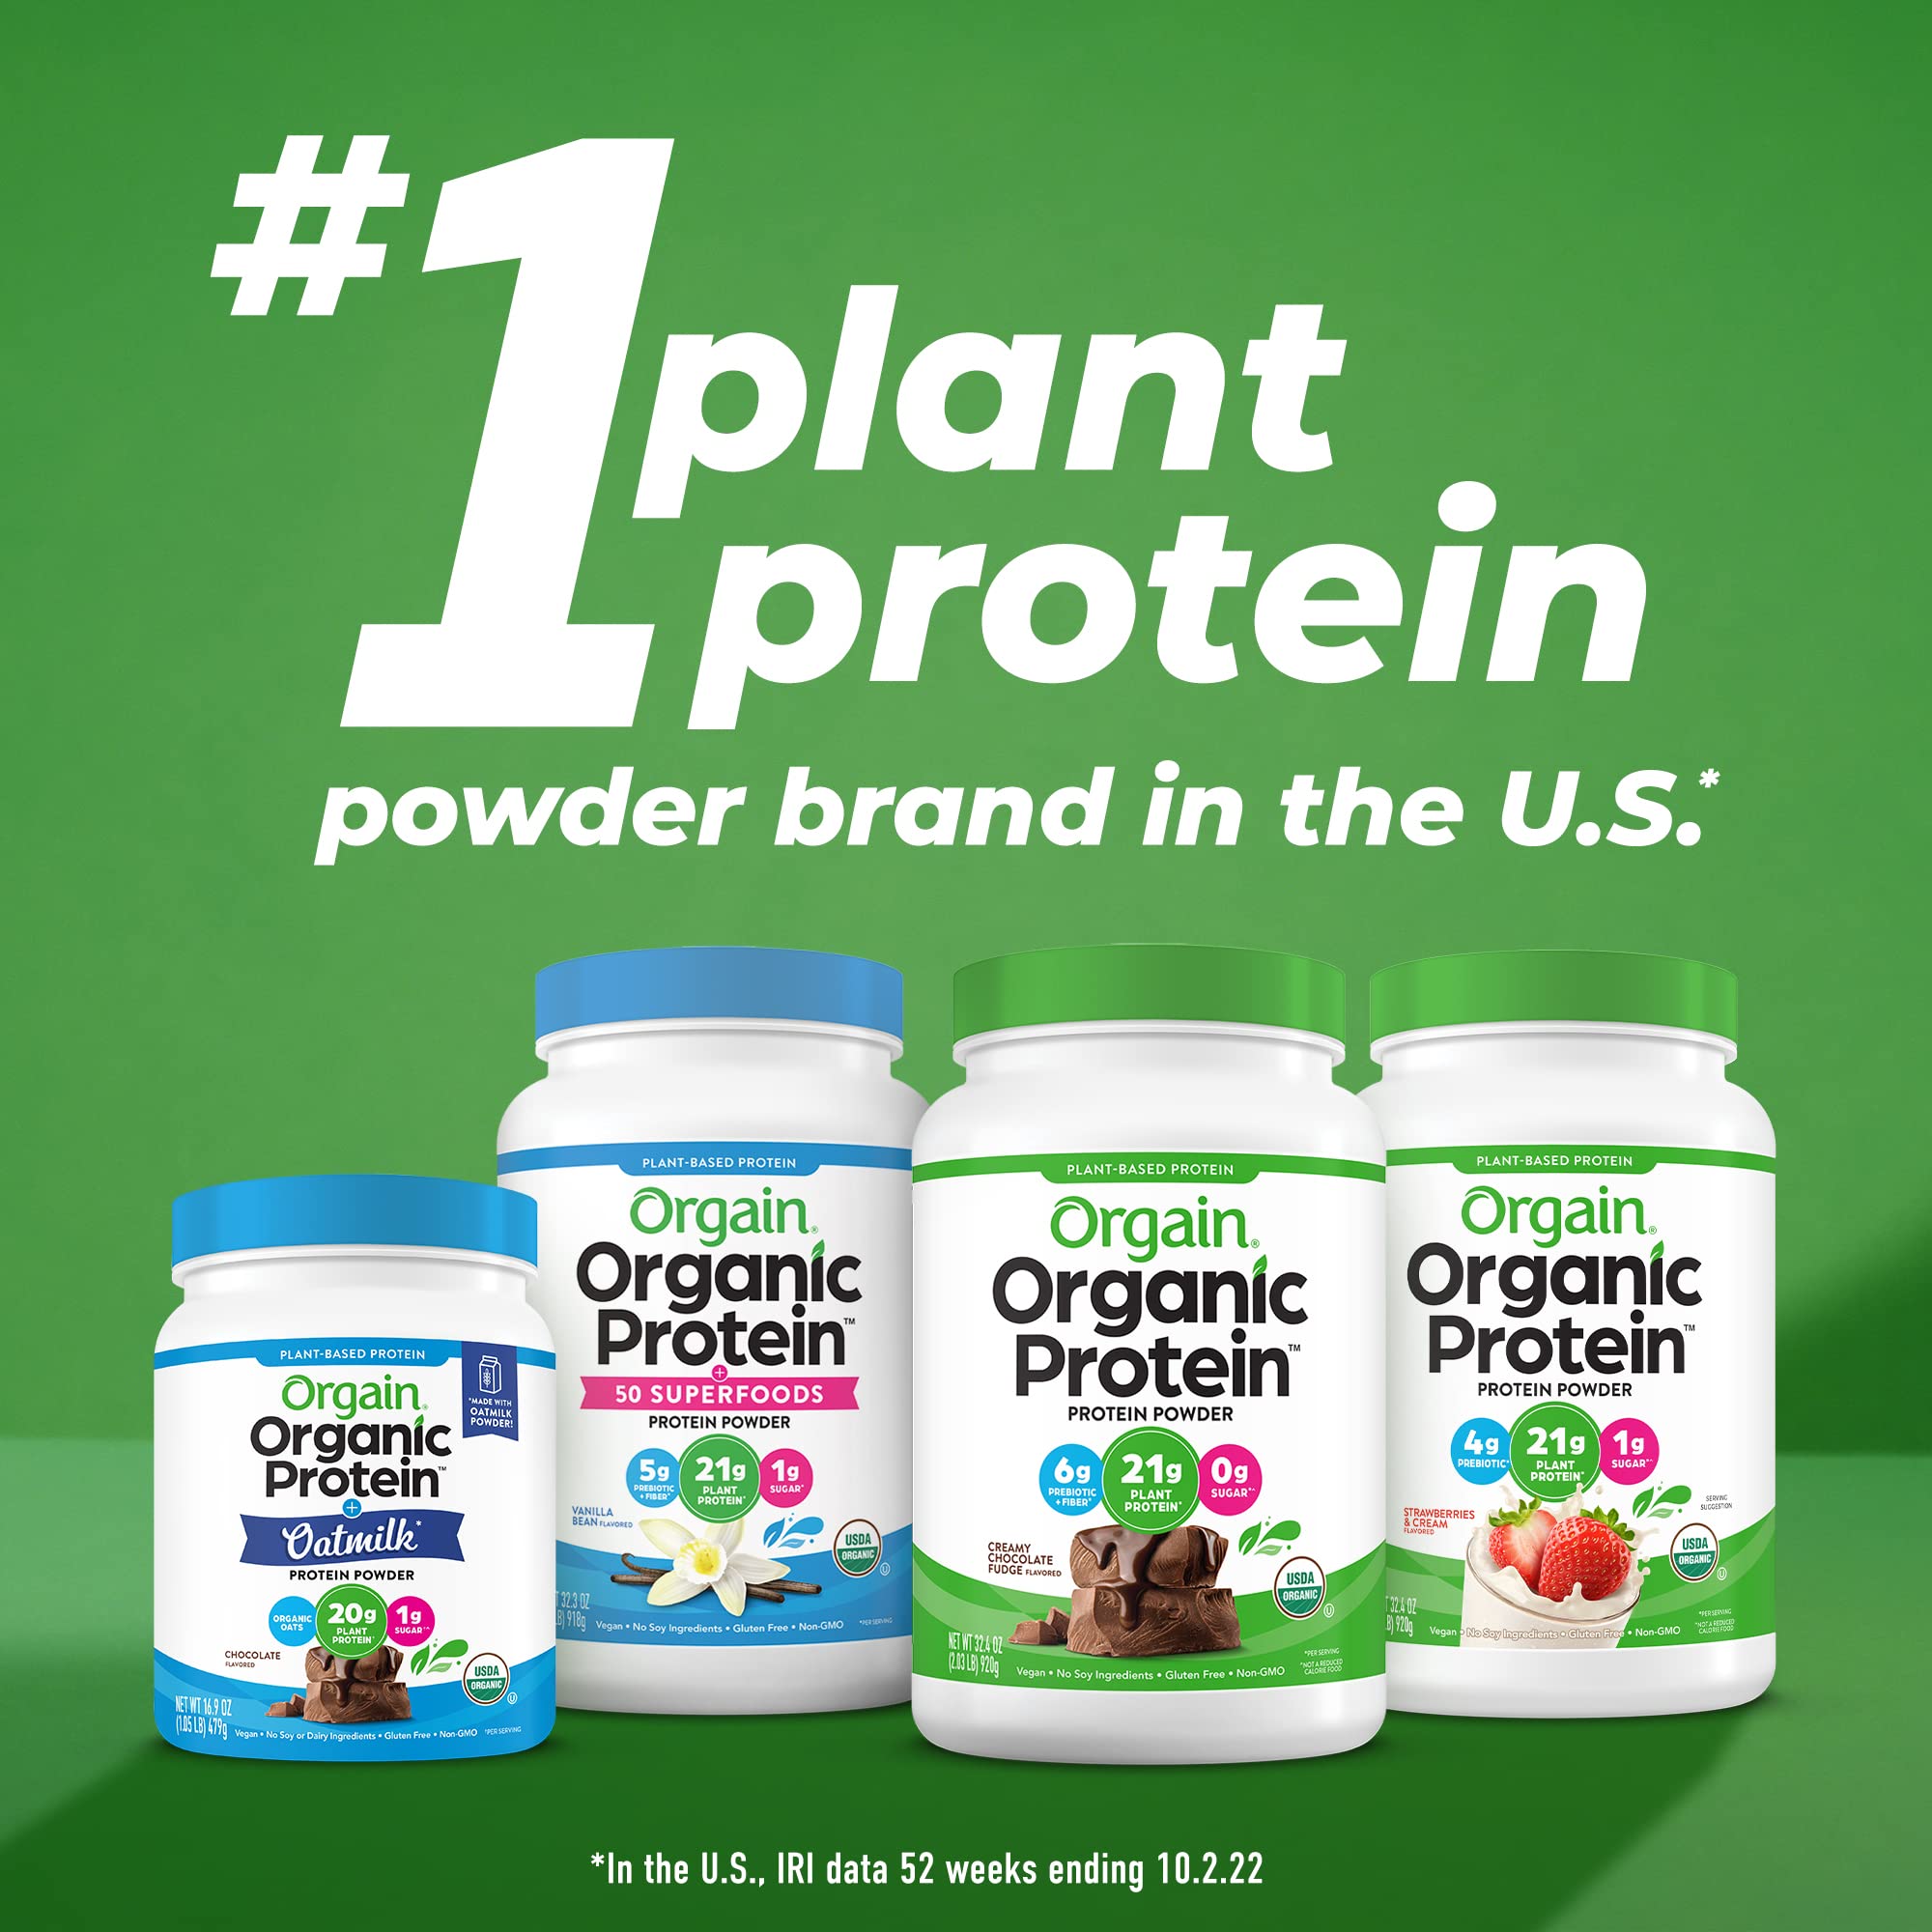 Orgain Organic Vegan Protein Powder + 50 Superfoods, Creamy Chocolate Fudge - 21g Plant Based Protein, Gluten Free, Dairy Free, Lactose Free, Soy Free, No Sugar Added, Kosher, B Vitamins - 2.02lb